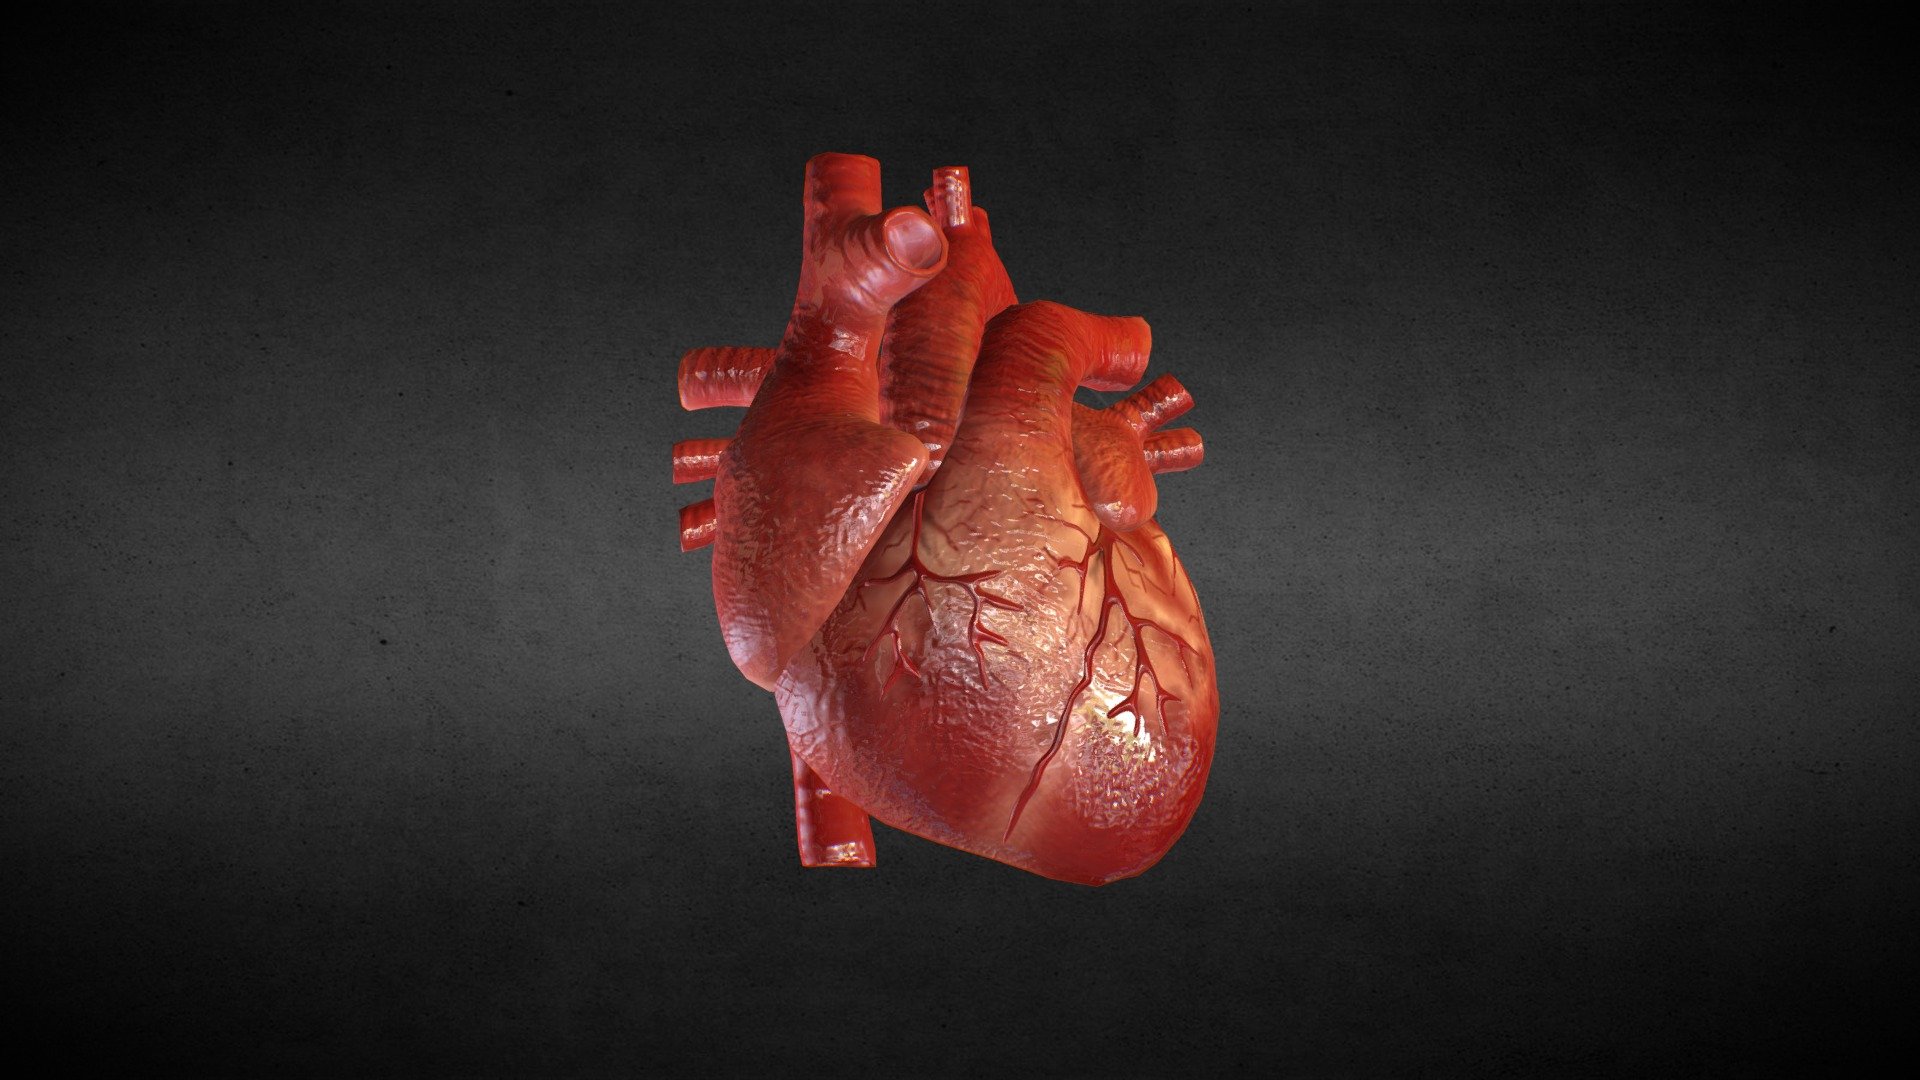 [Animation] Human Heart